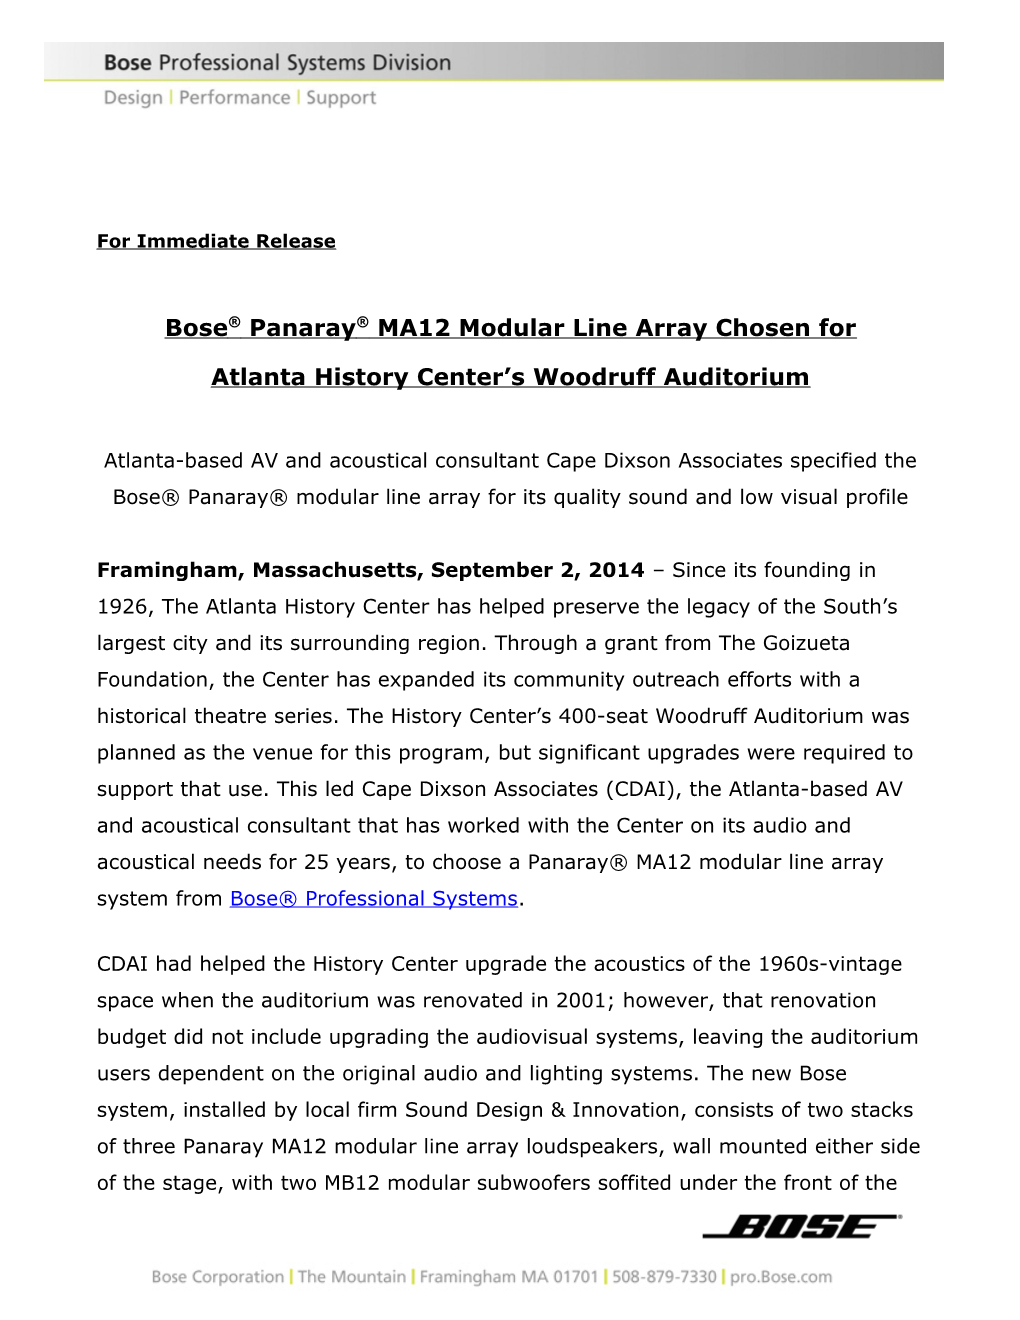 Bose Panaray MA12 Modular Line Array Chosen For